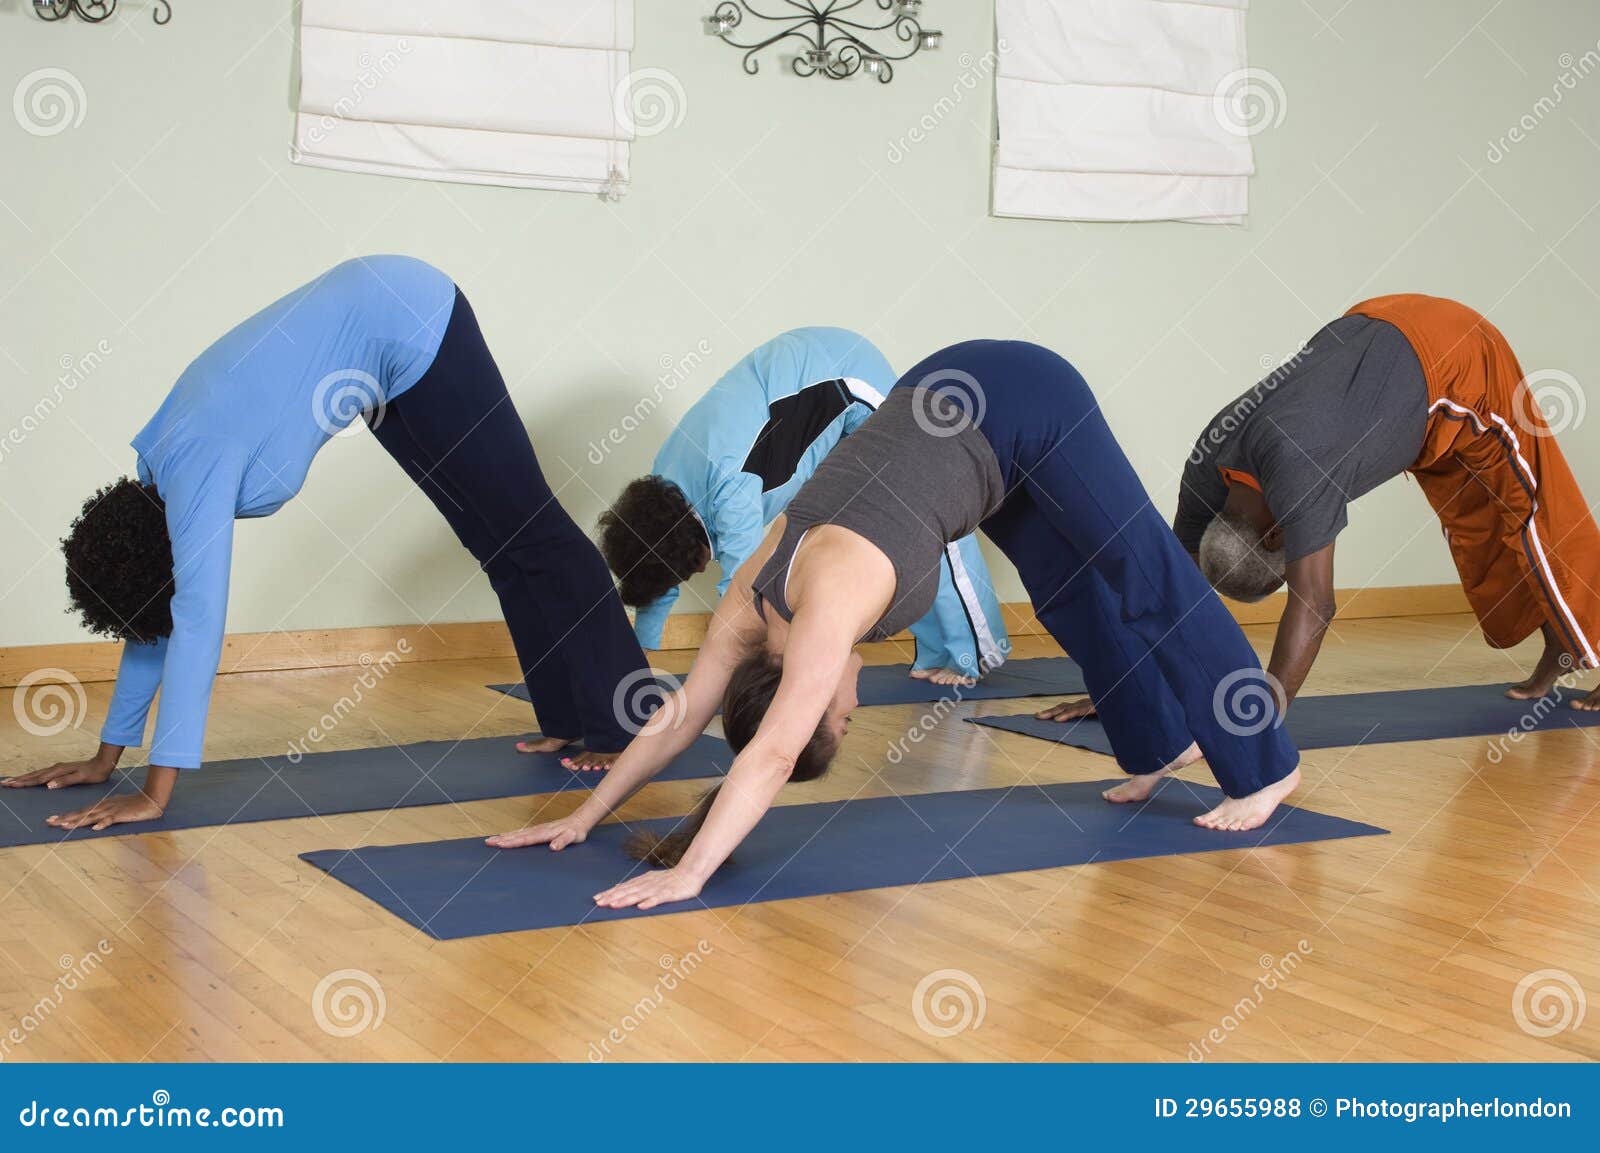 people practicing yoga